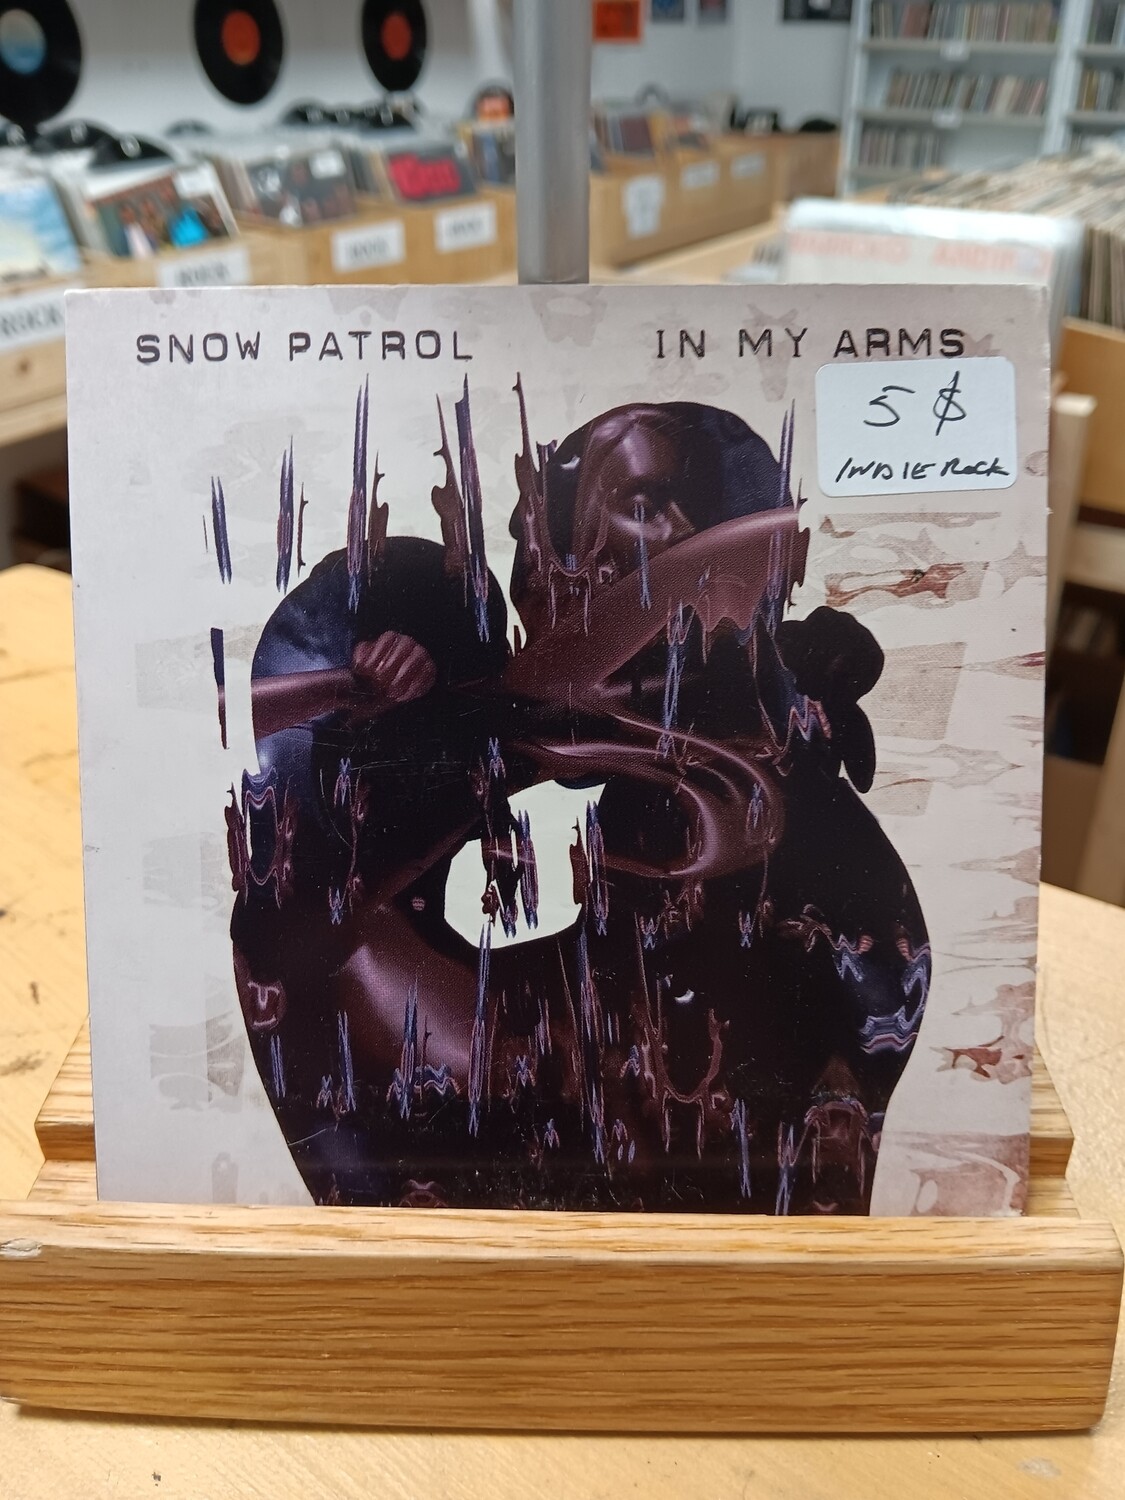 Snow Patrol - In my arms (CD single)